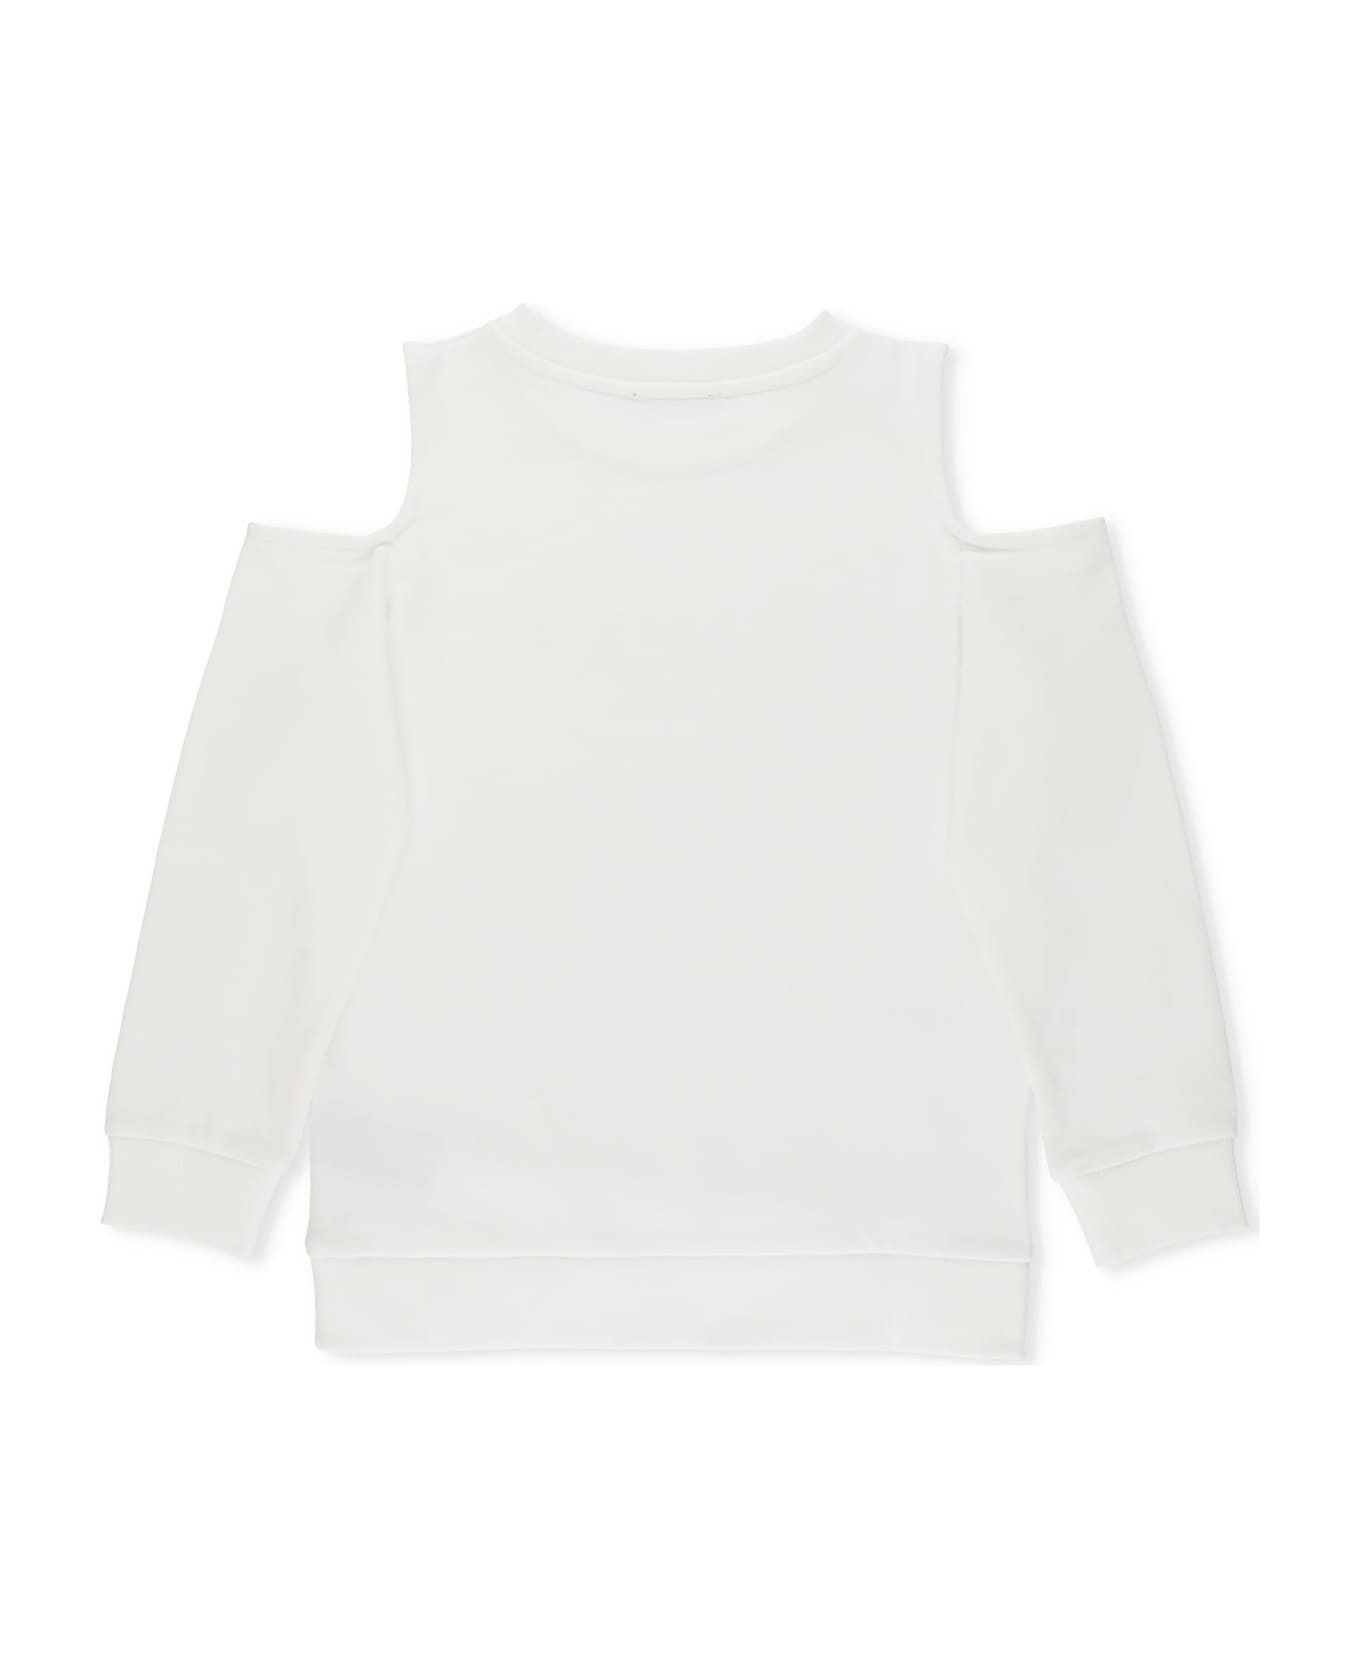 Balmain Sweatshirt With Bare Shoulders - White